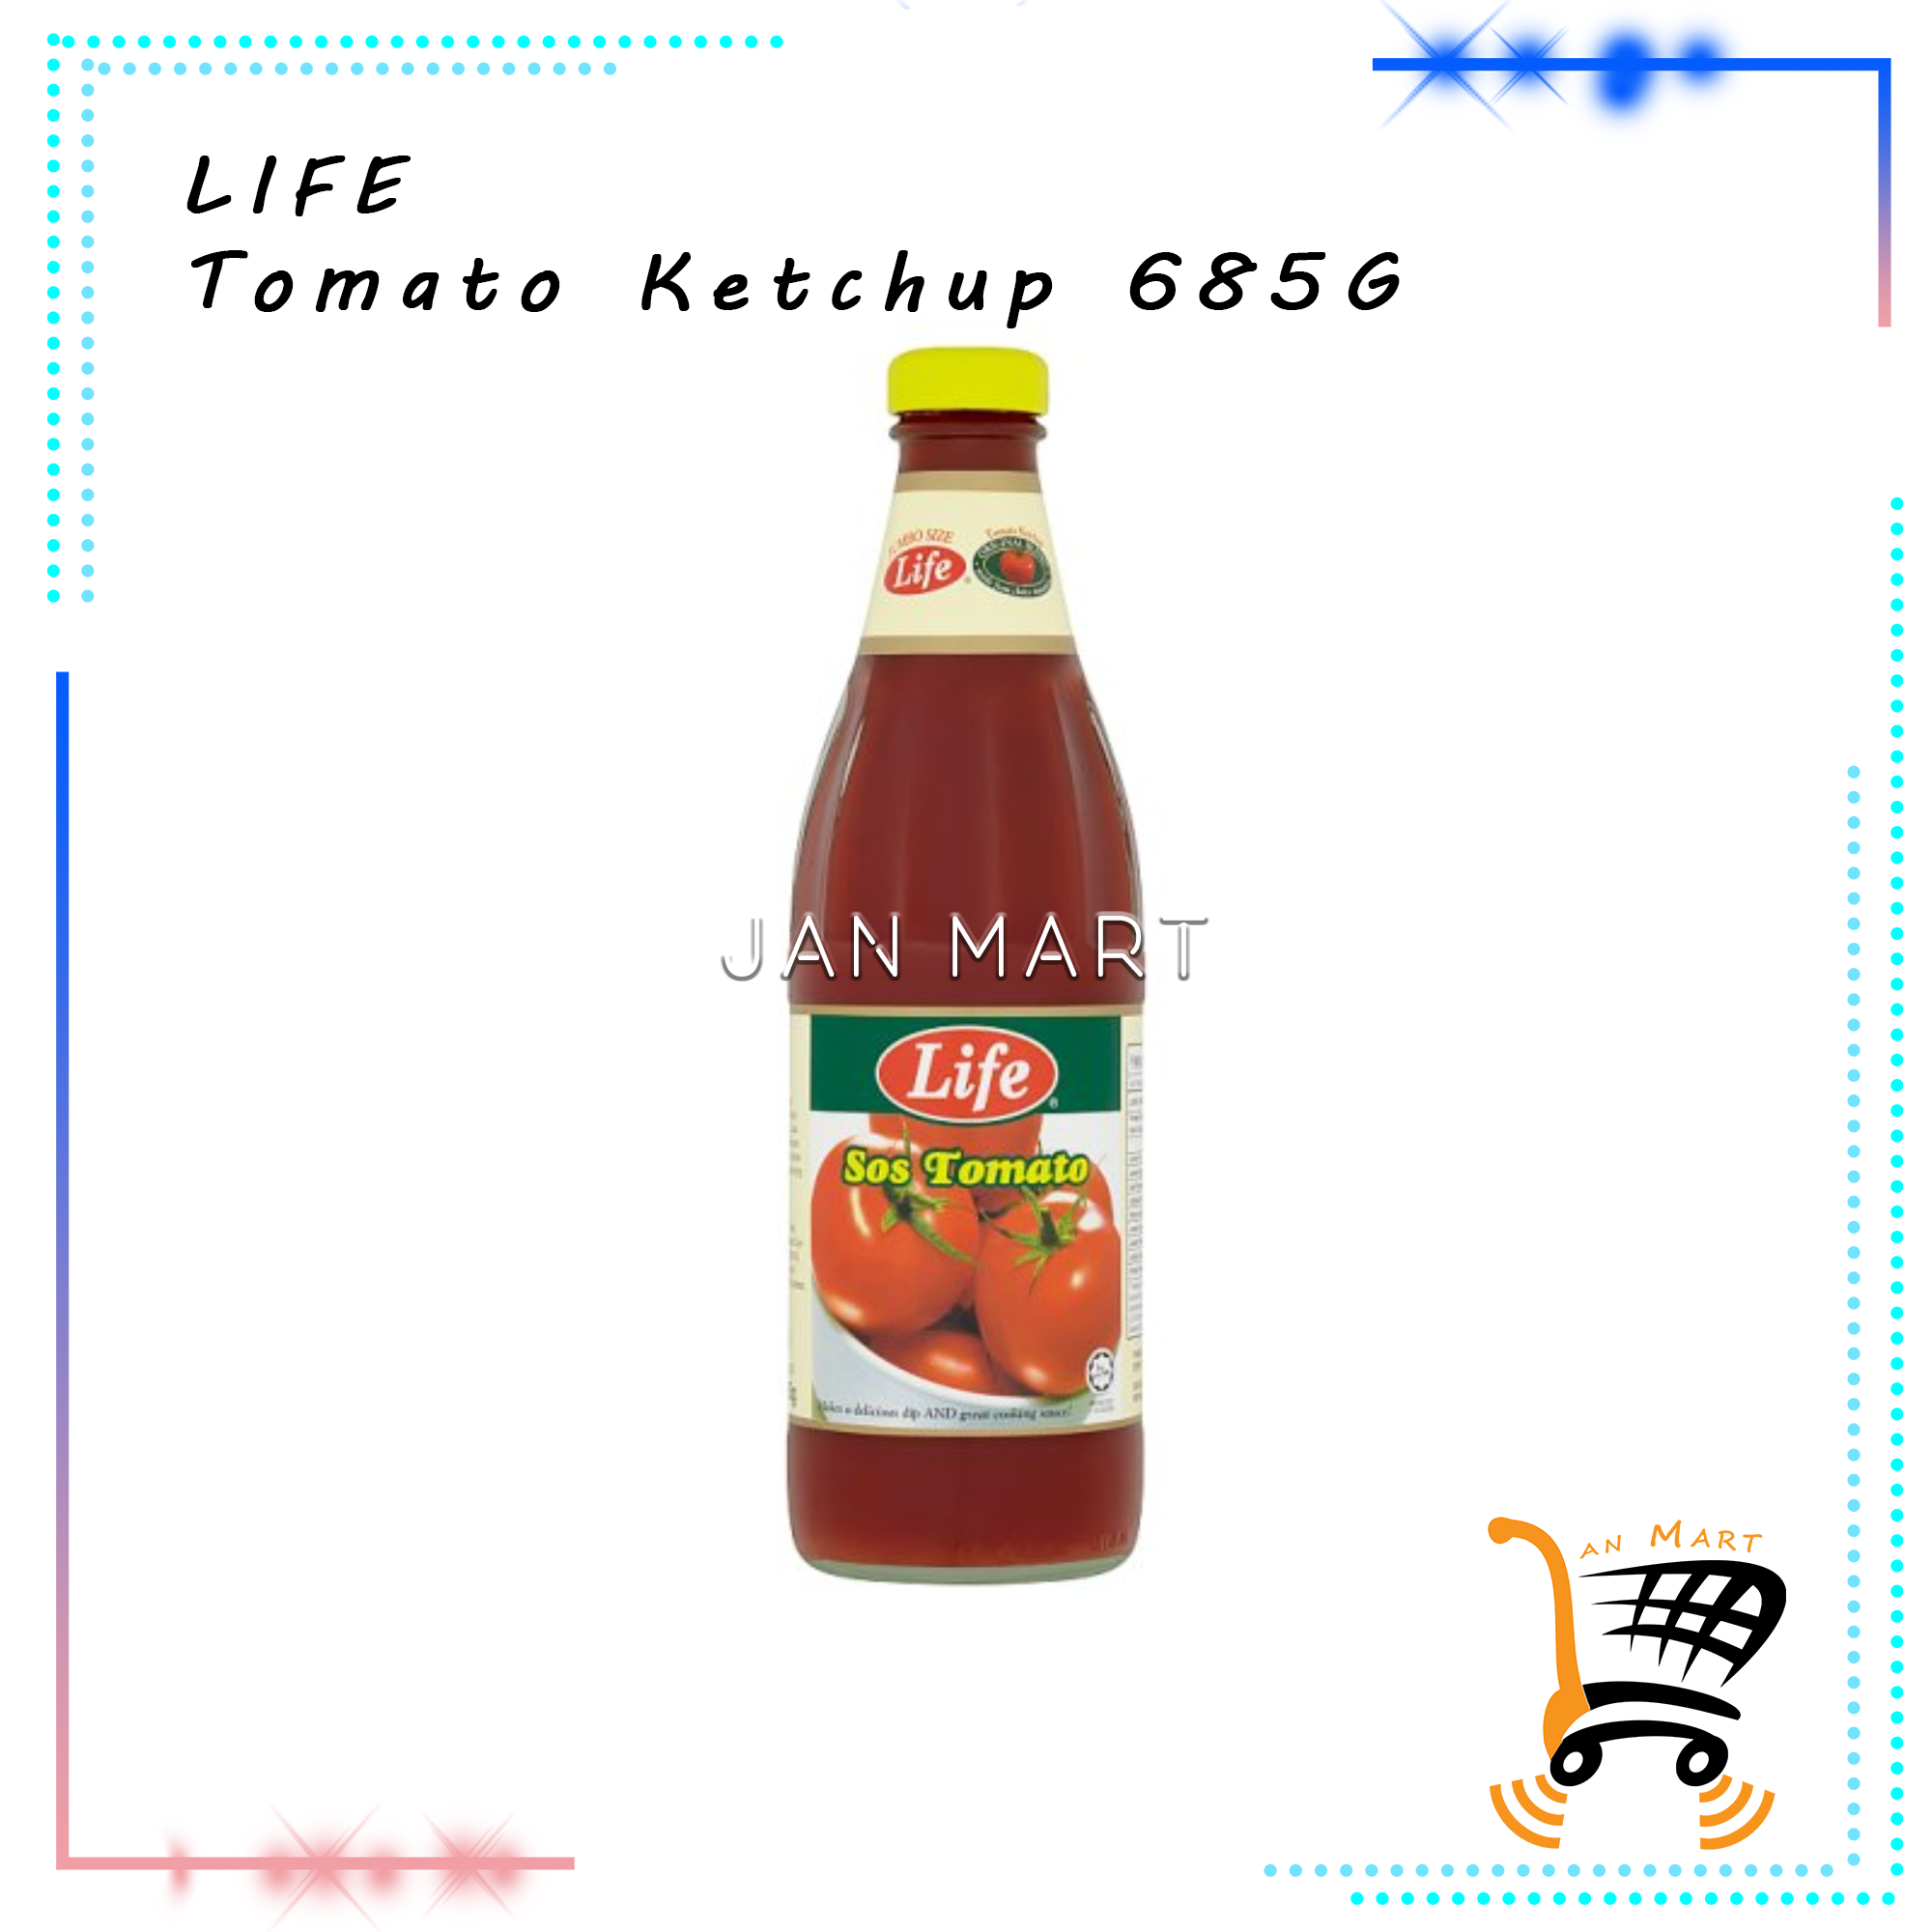 LIFE Tomato Ketchup 685G